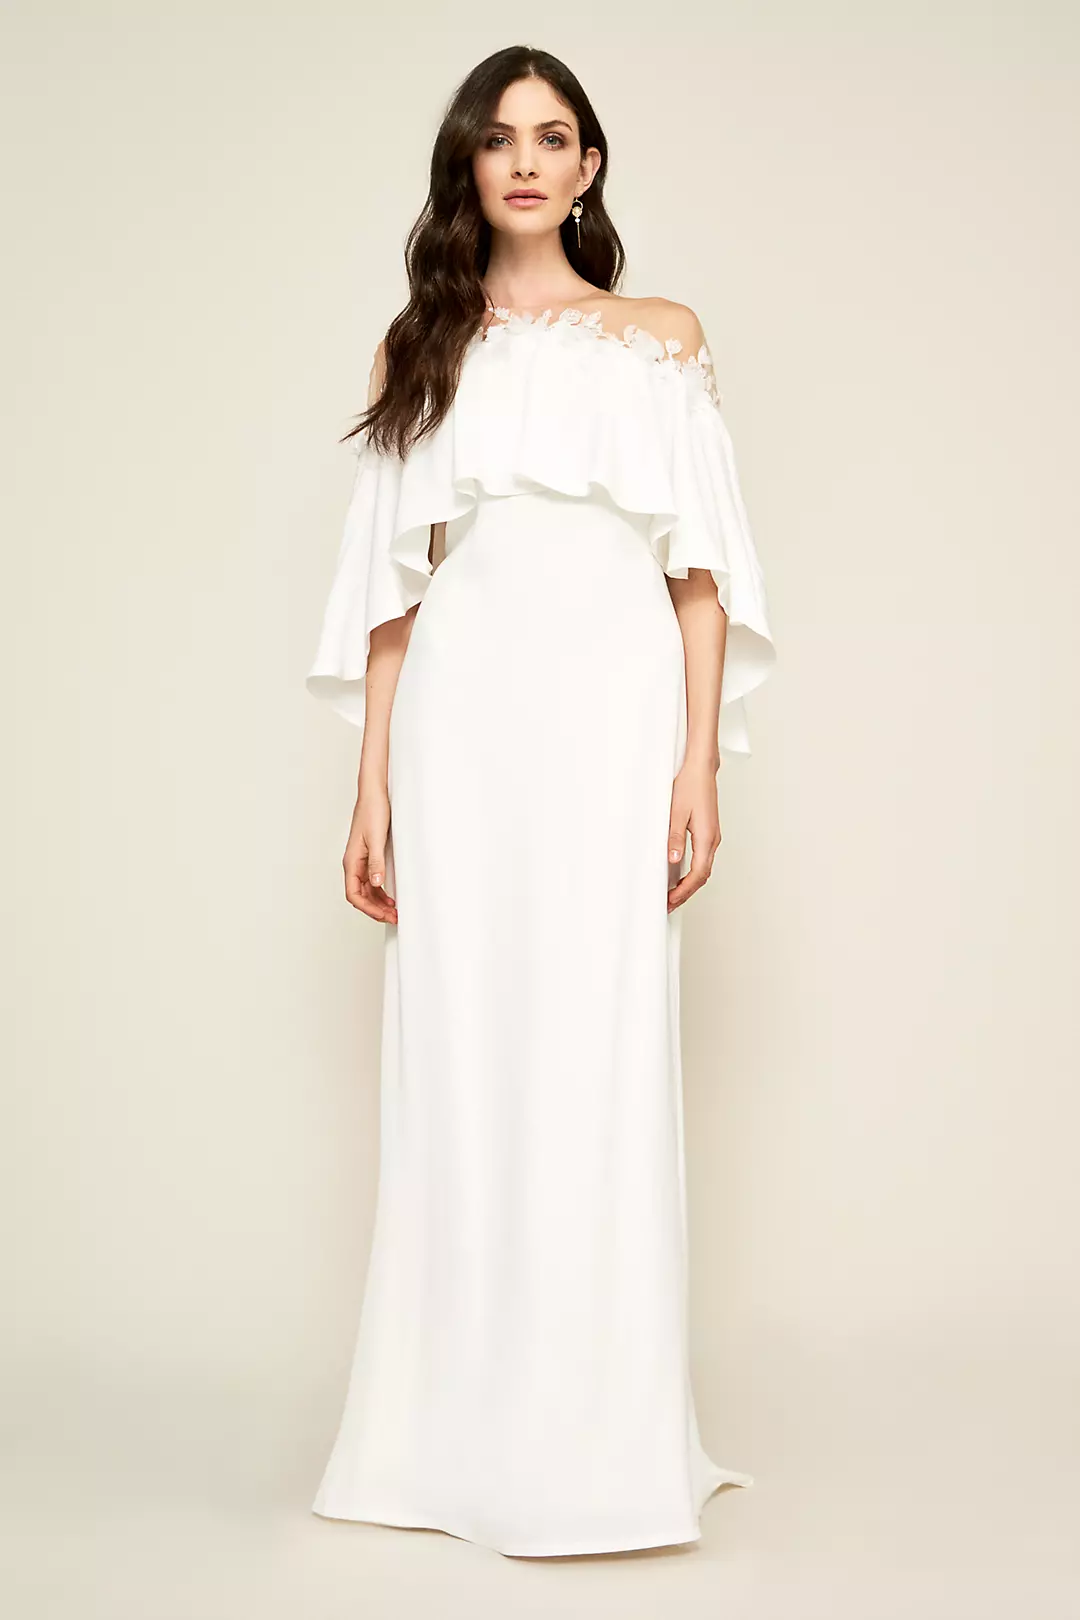 Capelet Athenia Wedding Dress Image